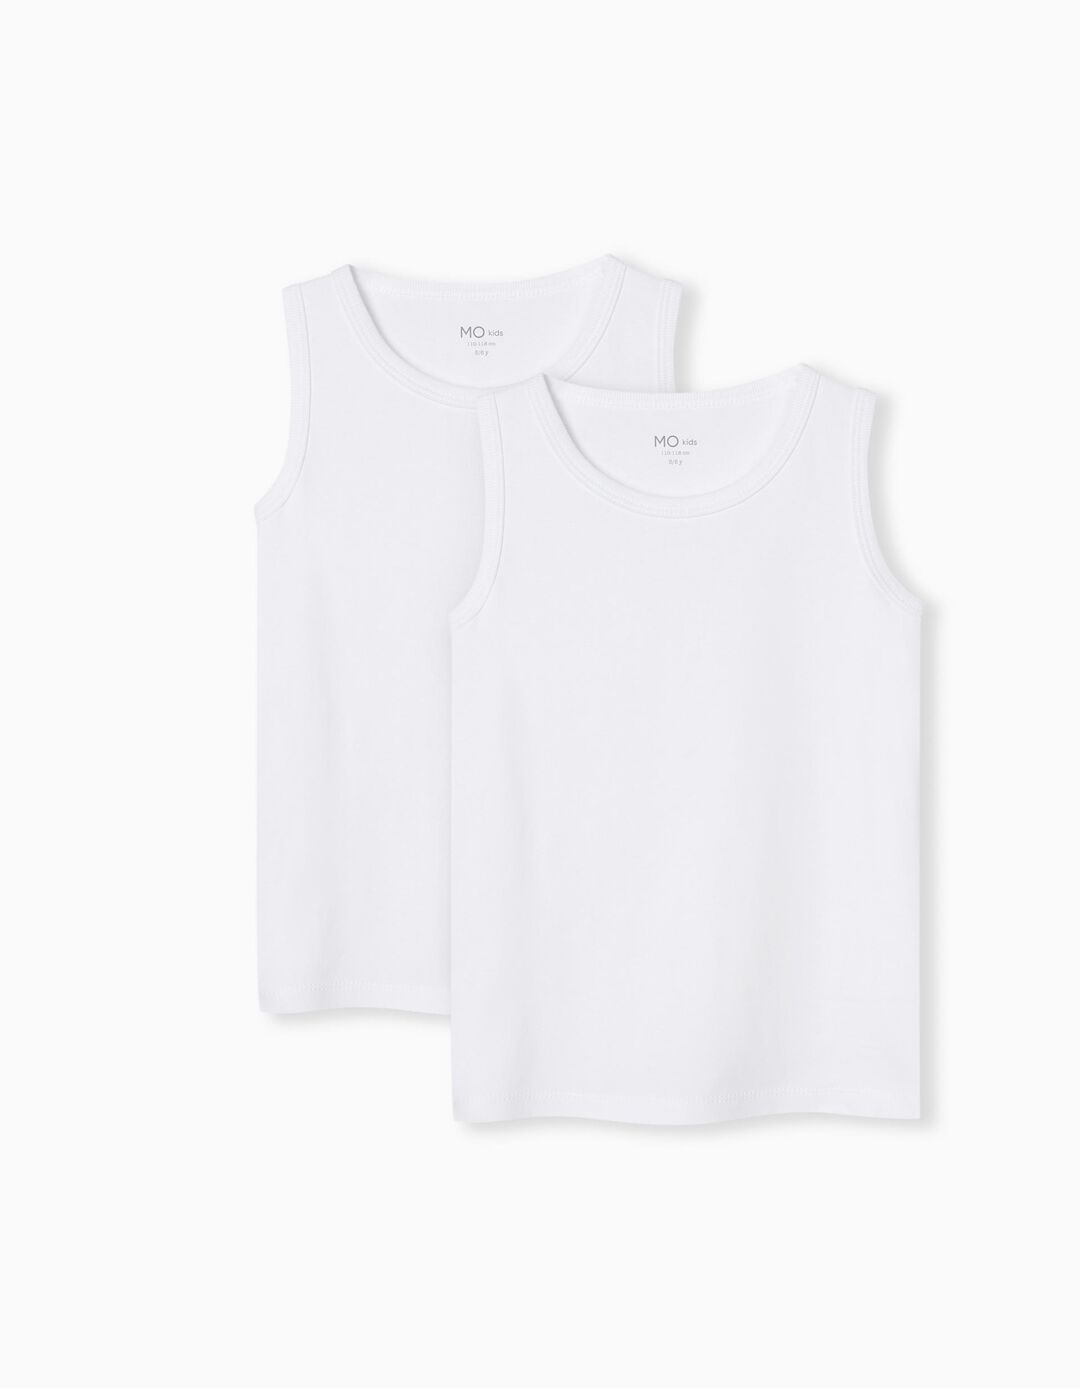 2 Sleeveless Underwear T-shirts Pack, Boys, White